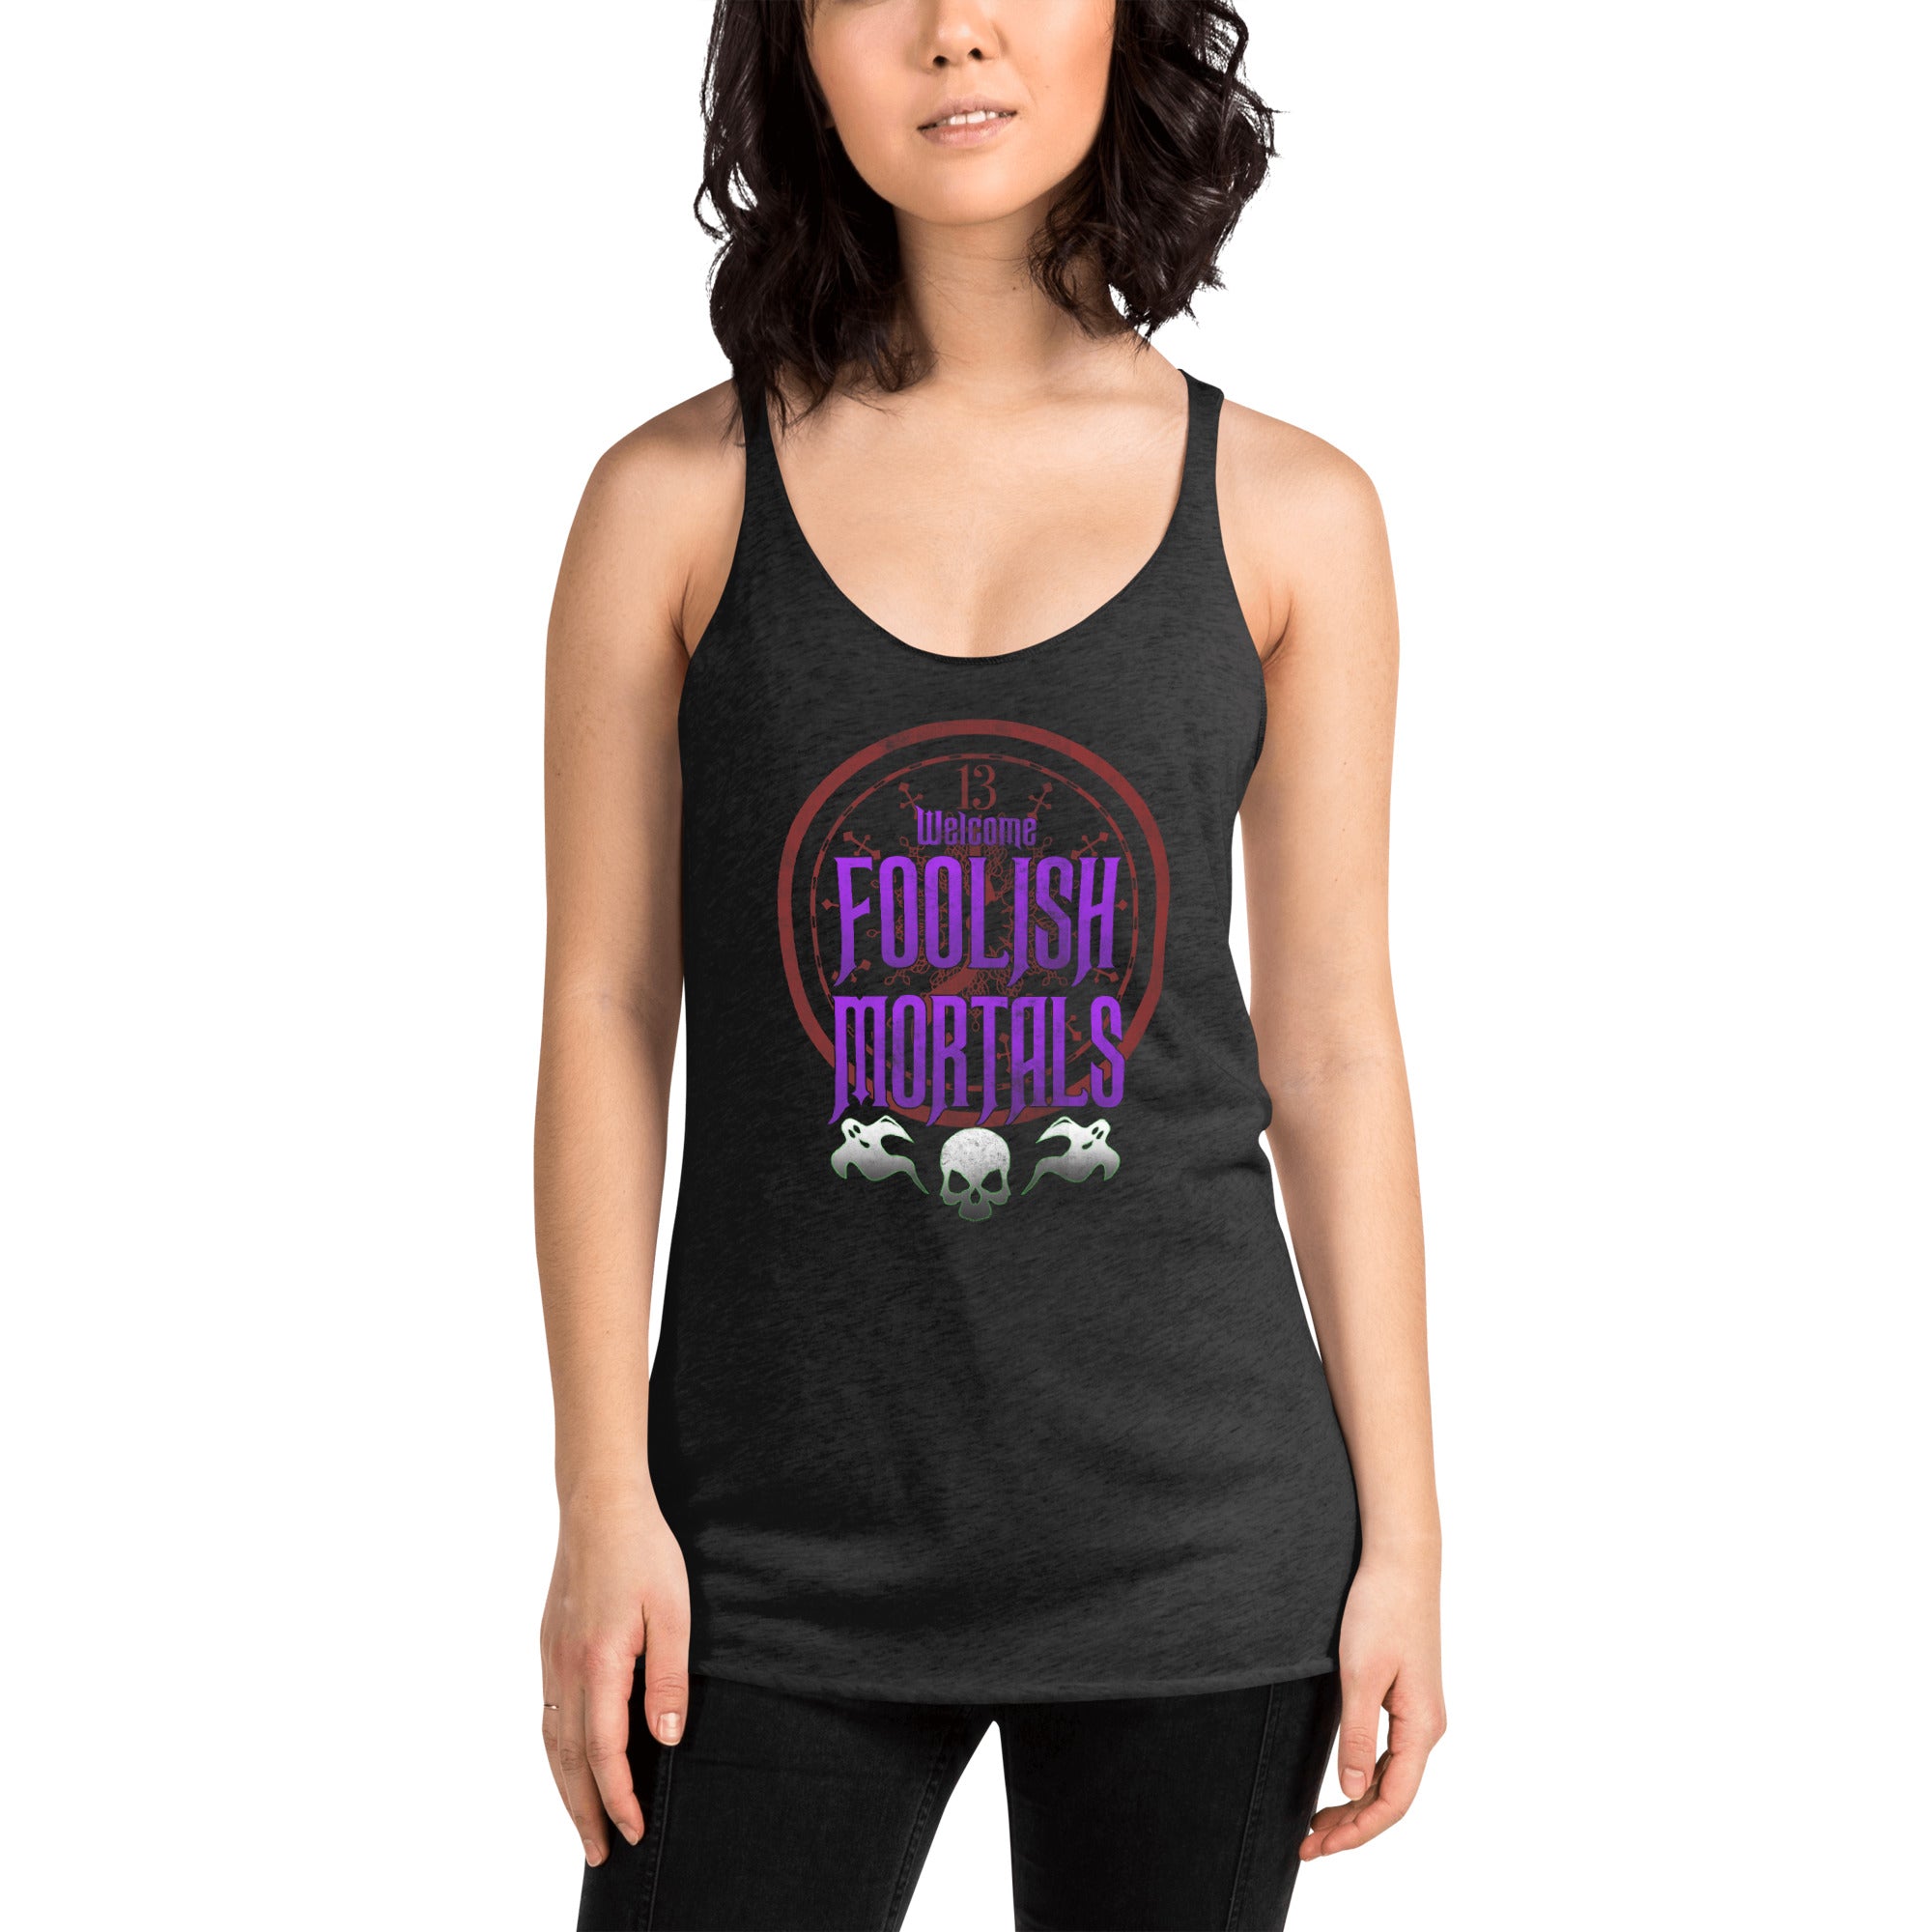 Welcome Foolish Mortals Haunted Mansion Women's Racerback Tank Top Shirt - Edge of Life Designs